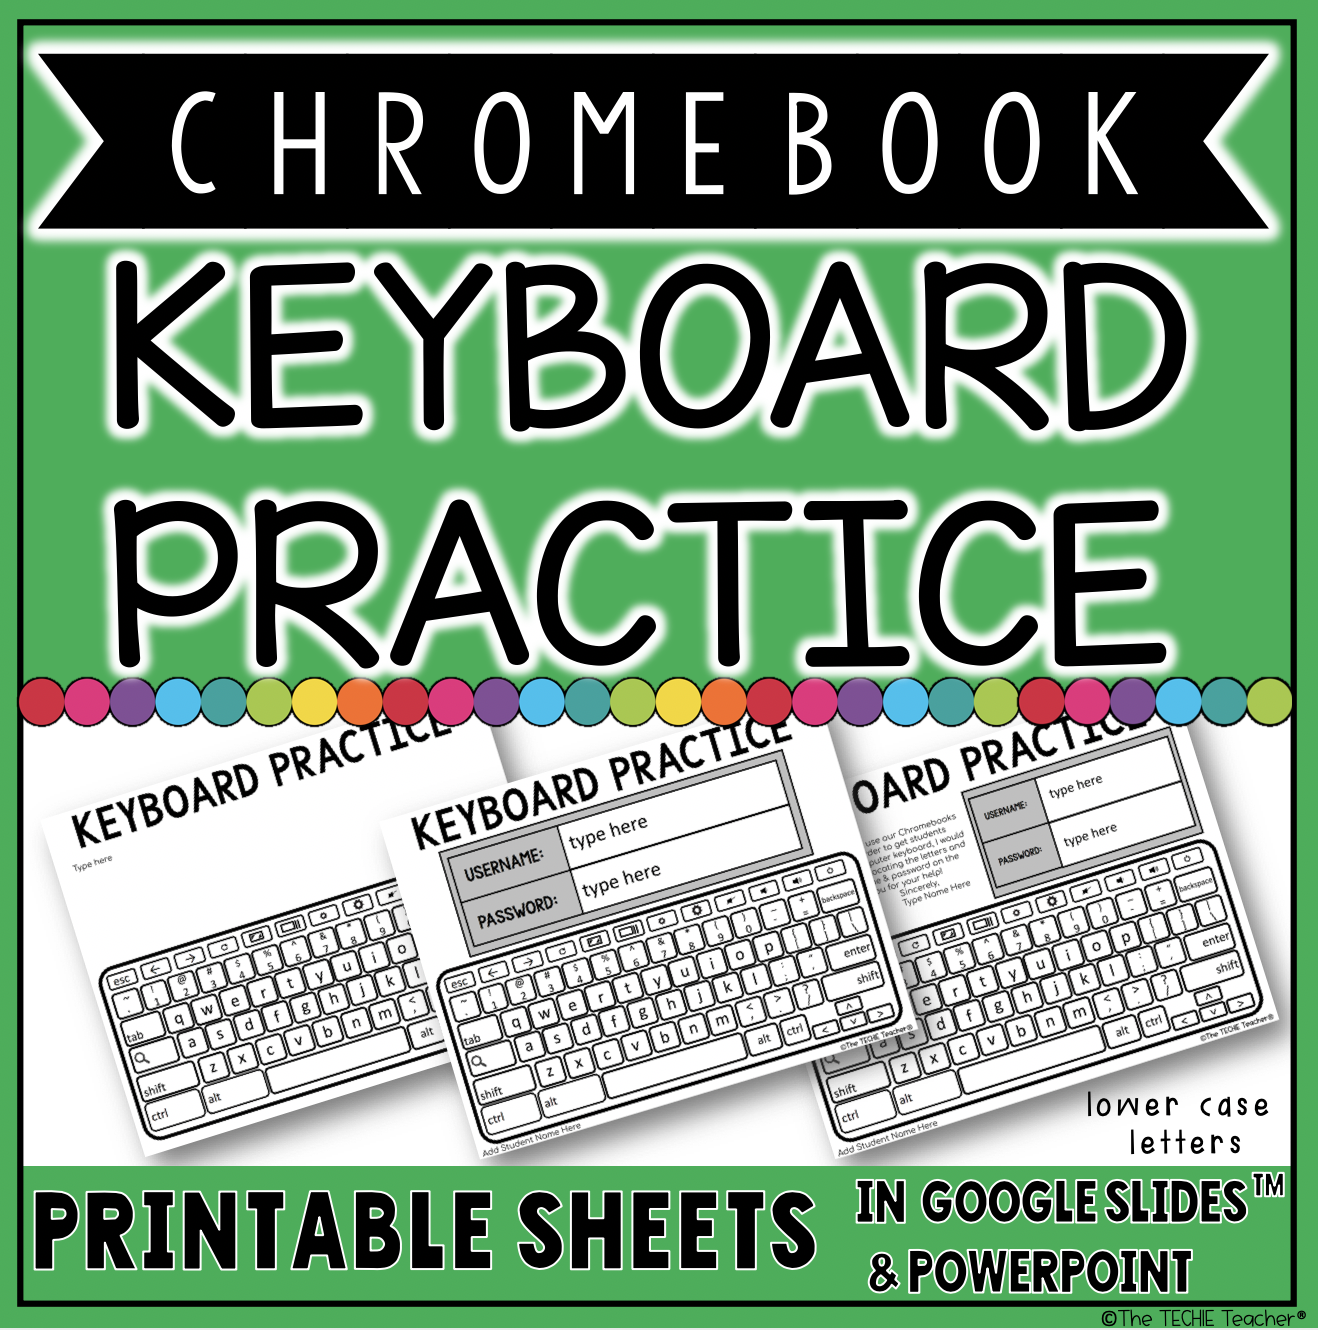 Chromebook Keyboard Practice Sheets